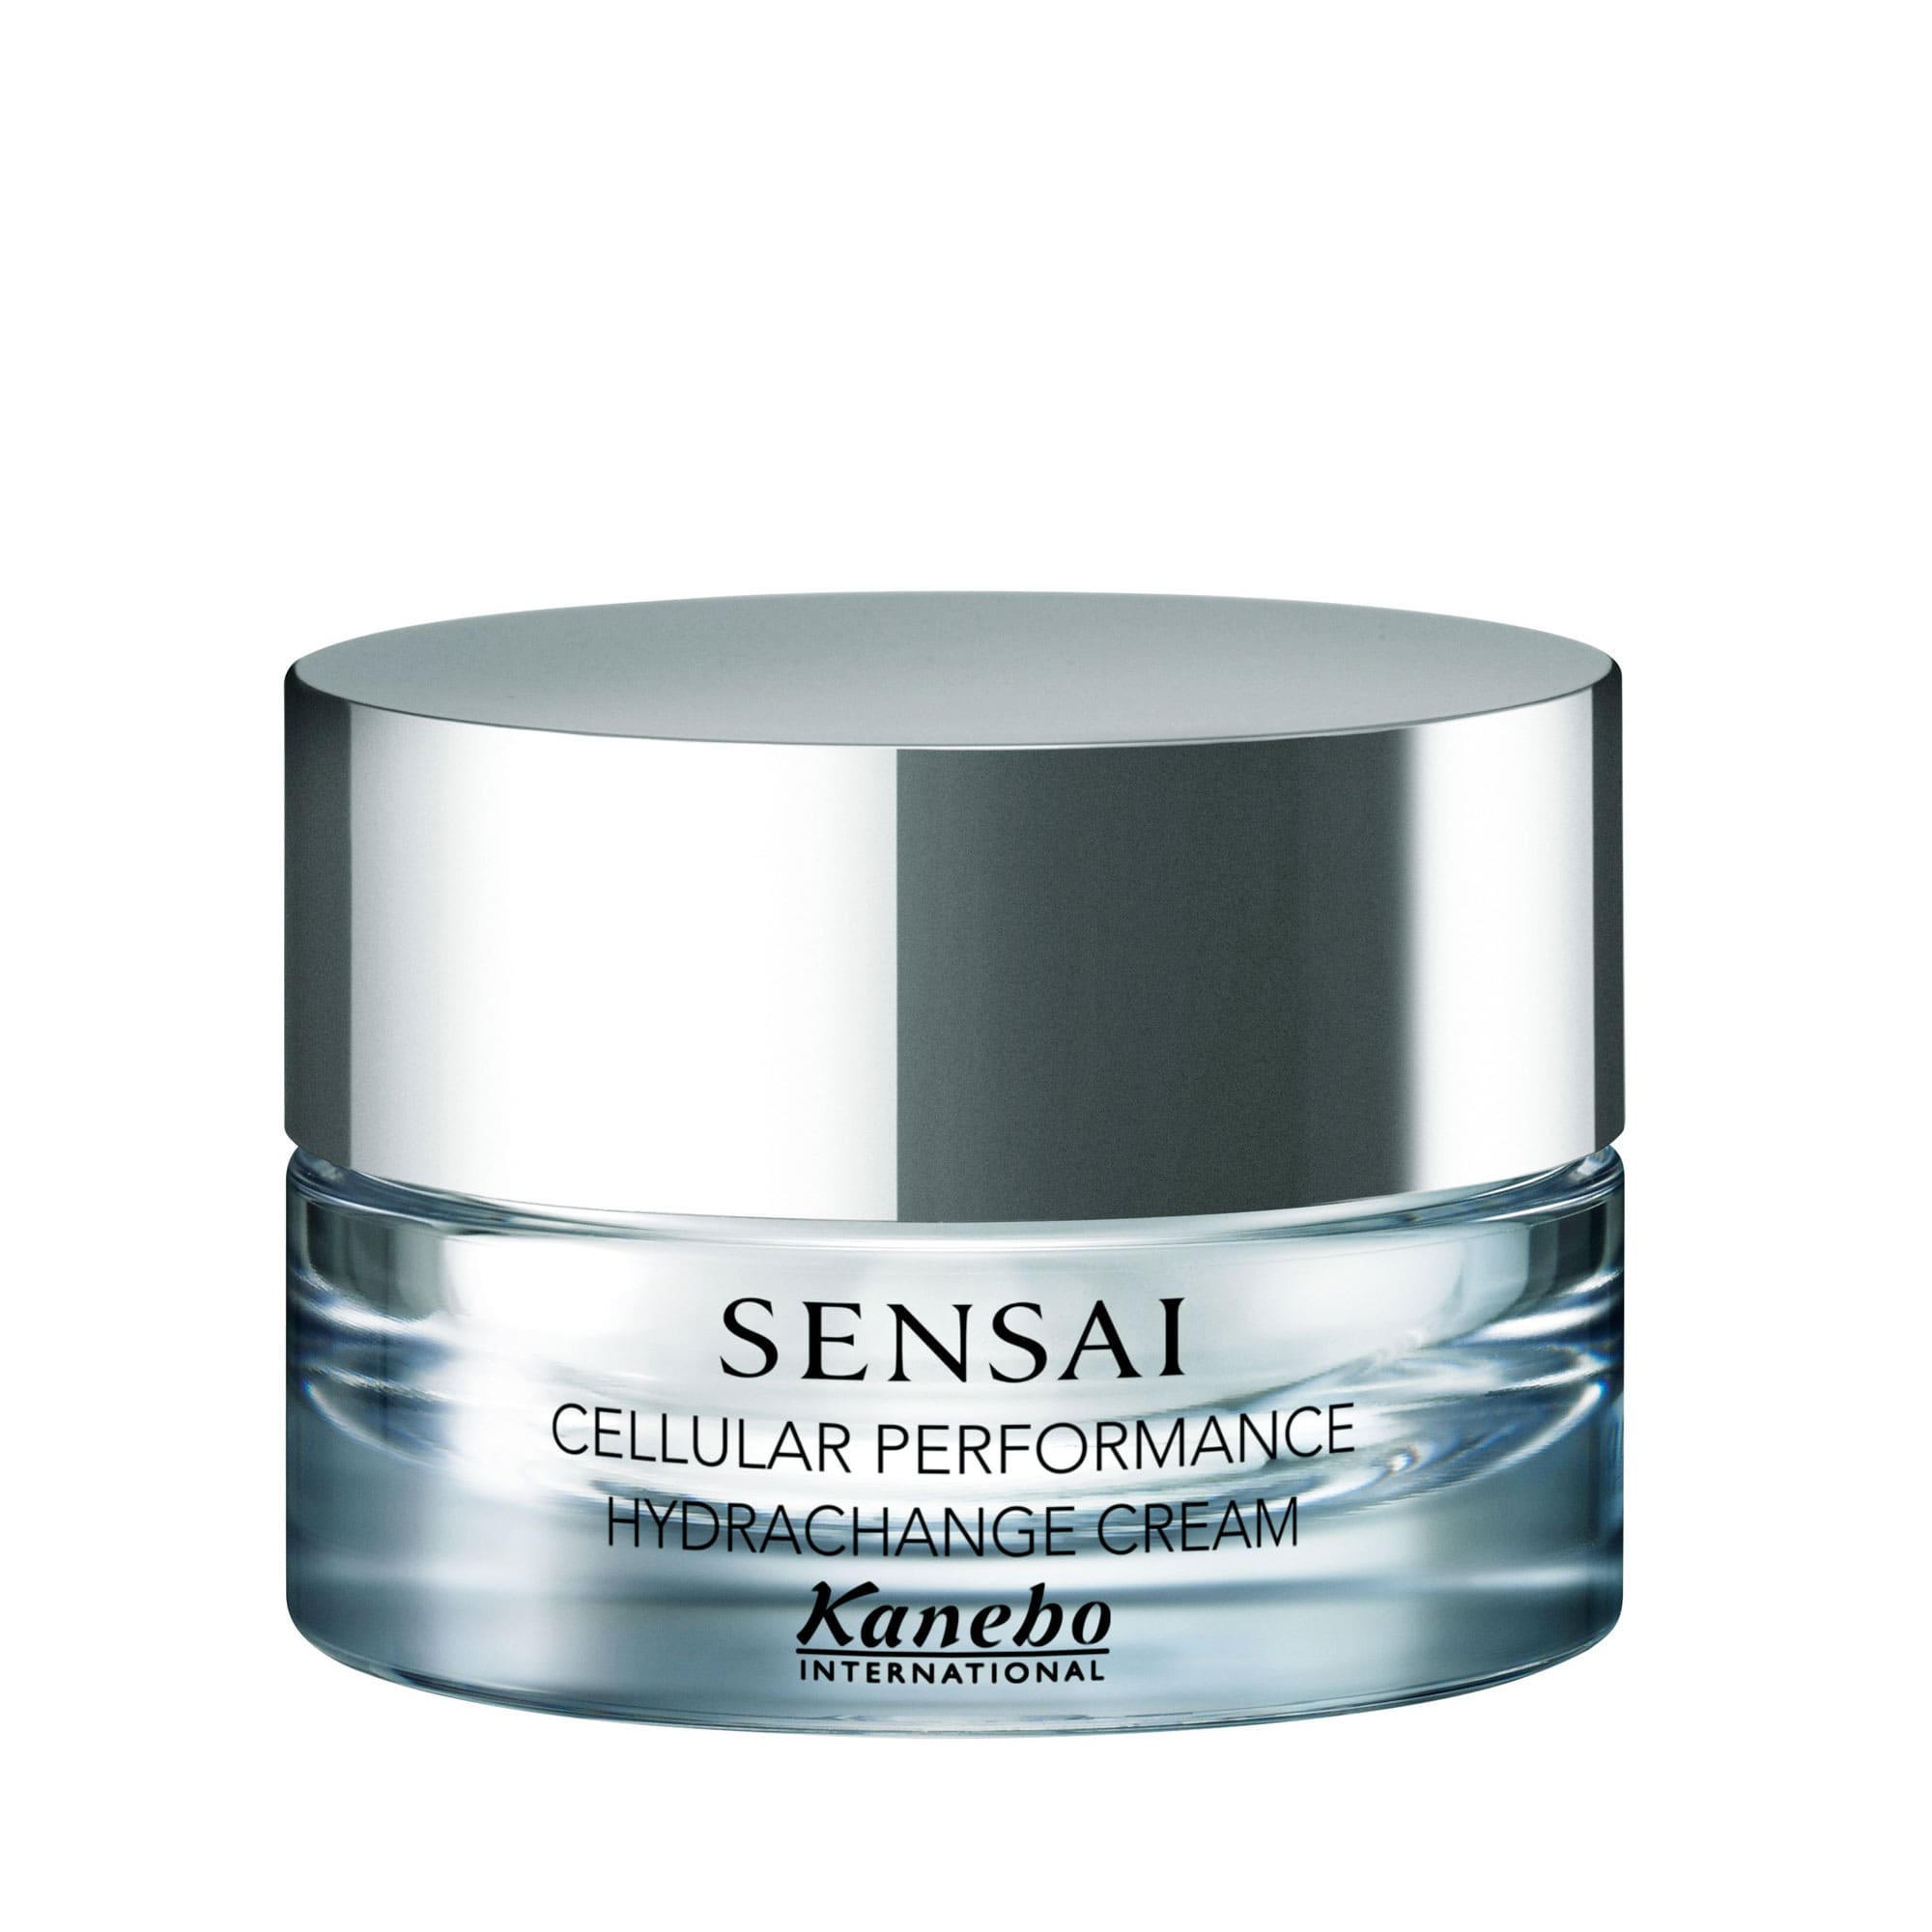 Cellular Performance Hydrachange Cream, 40 ml från Sensai